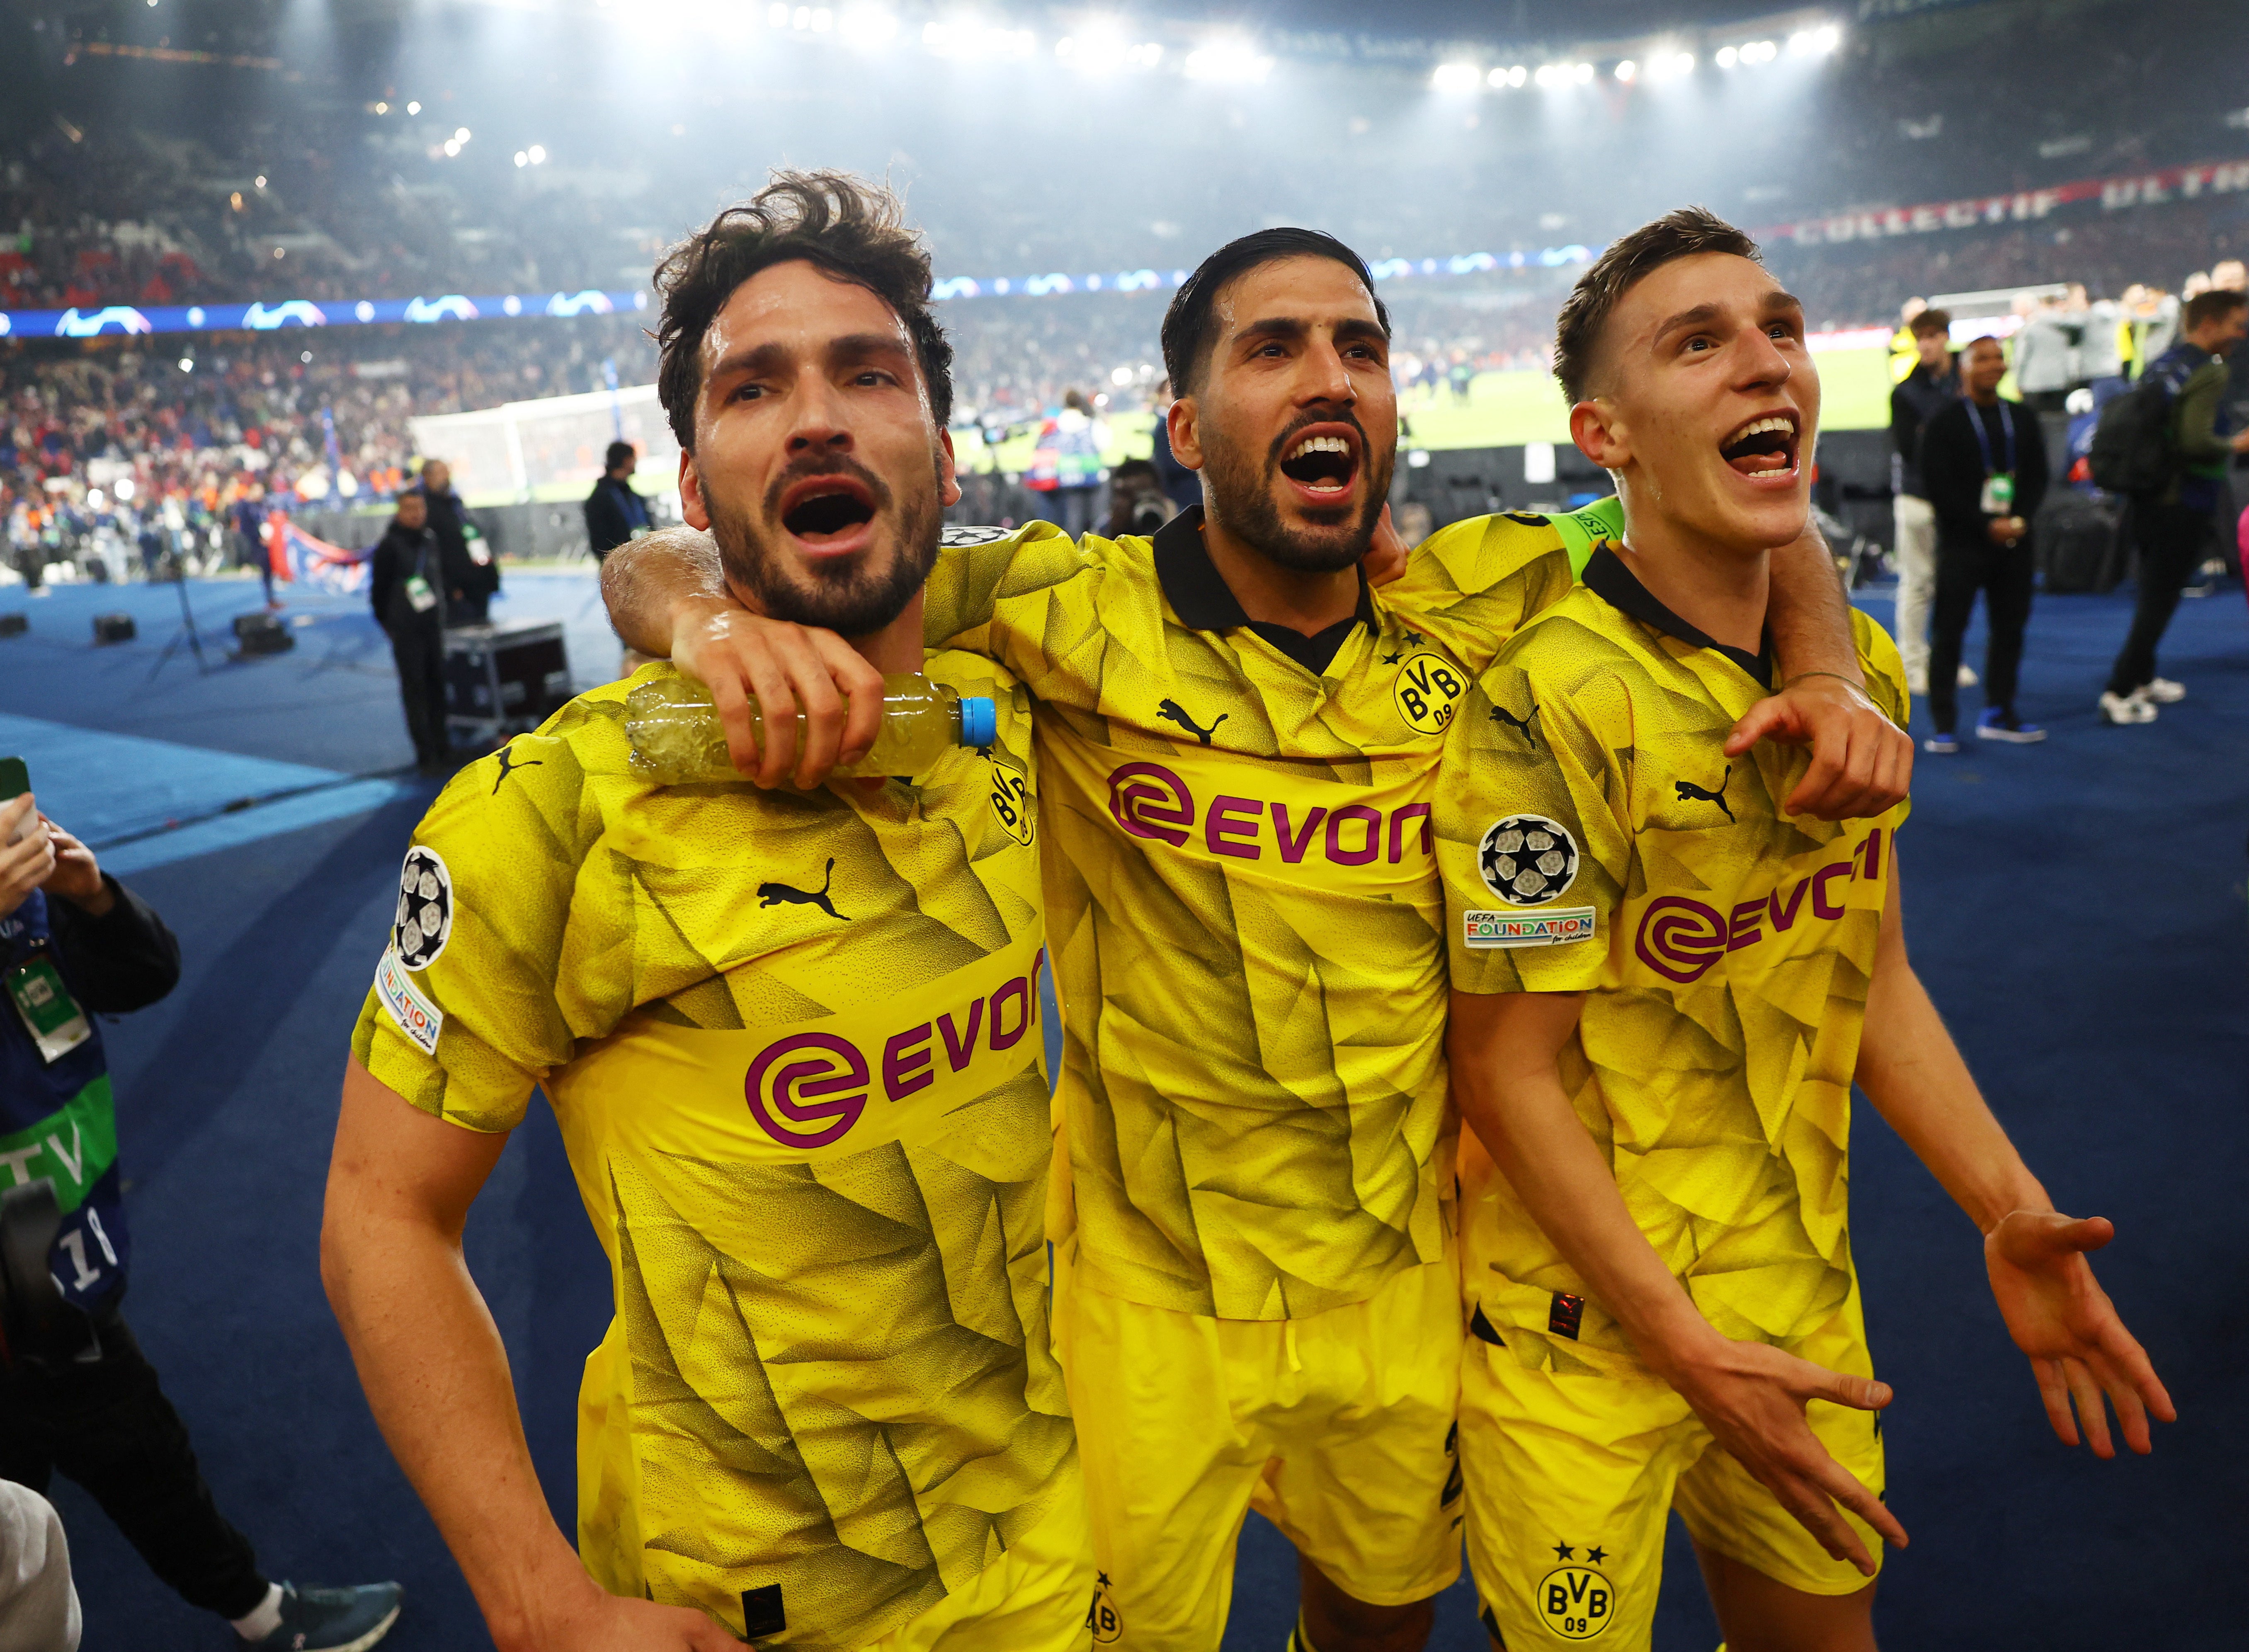 Borussia Dortmund’s fairytale campaign has led them to Champions League final